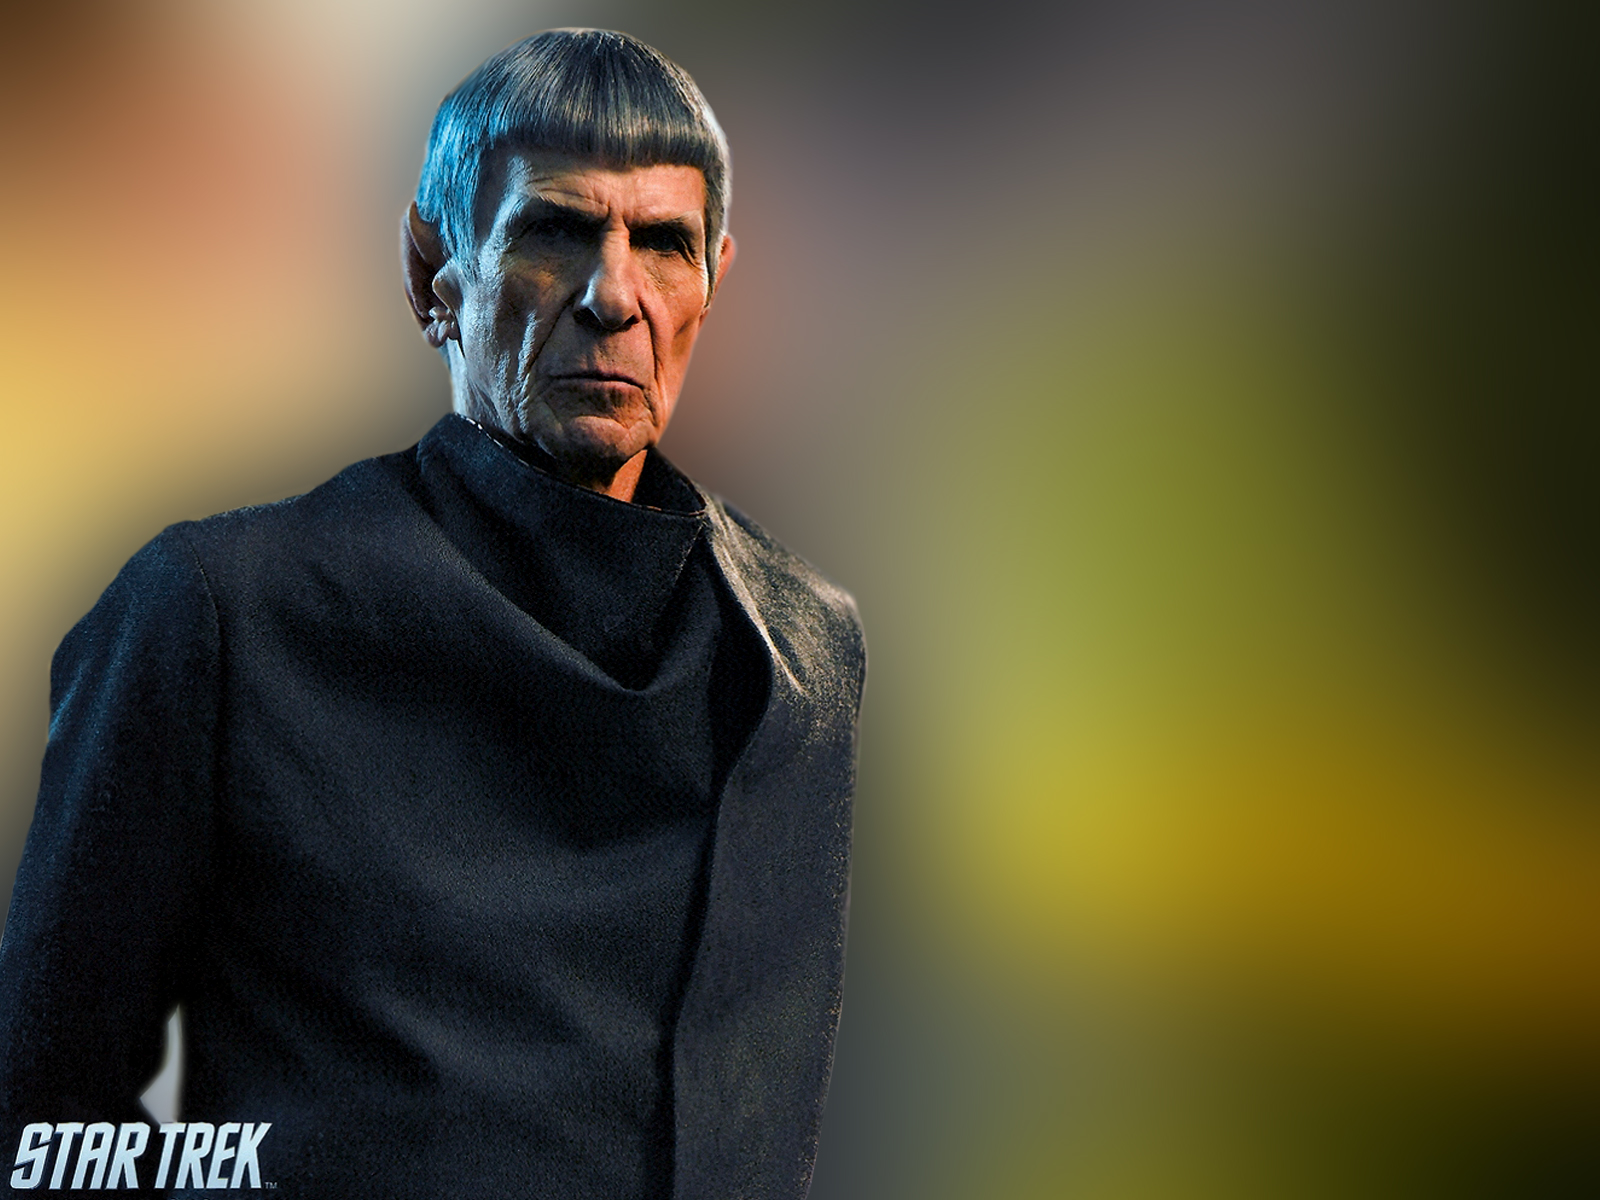 Star Trek Tos Spock Wallpaper Prime